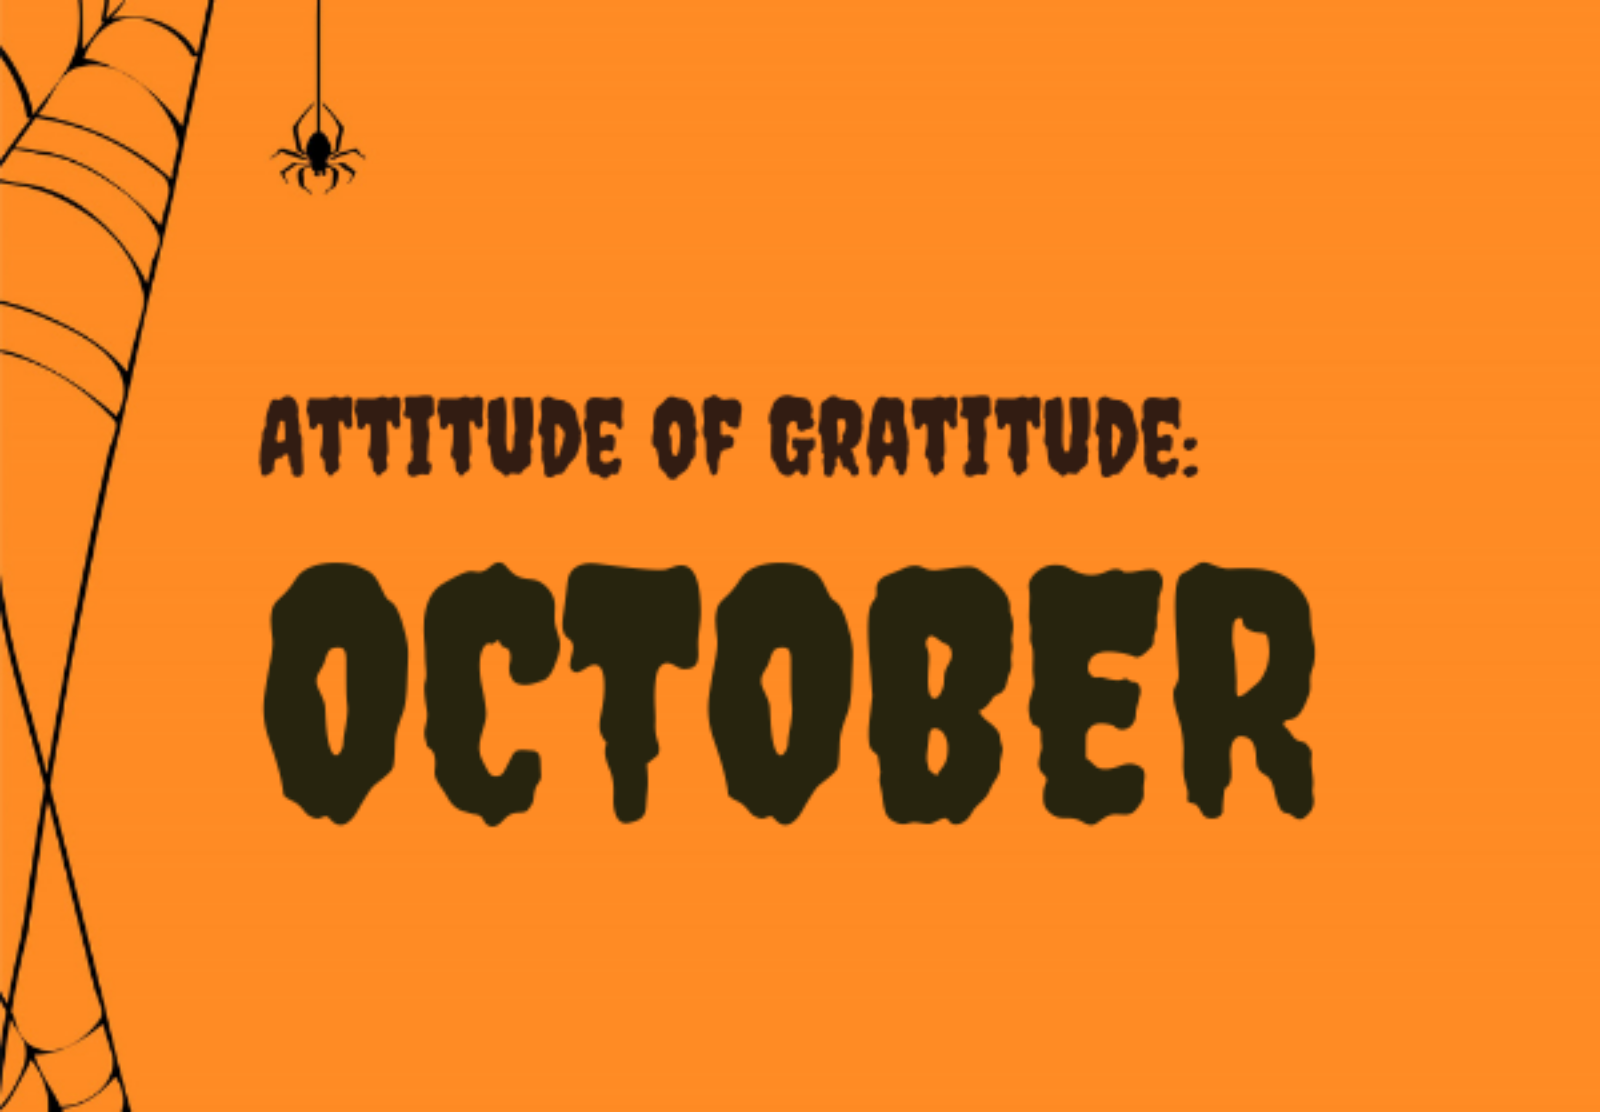 Attitude of Gratitude: October